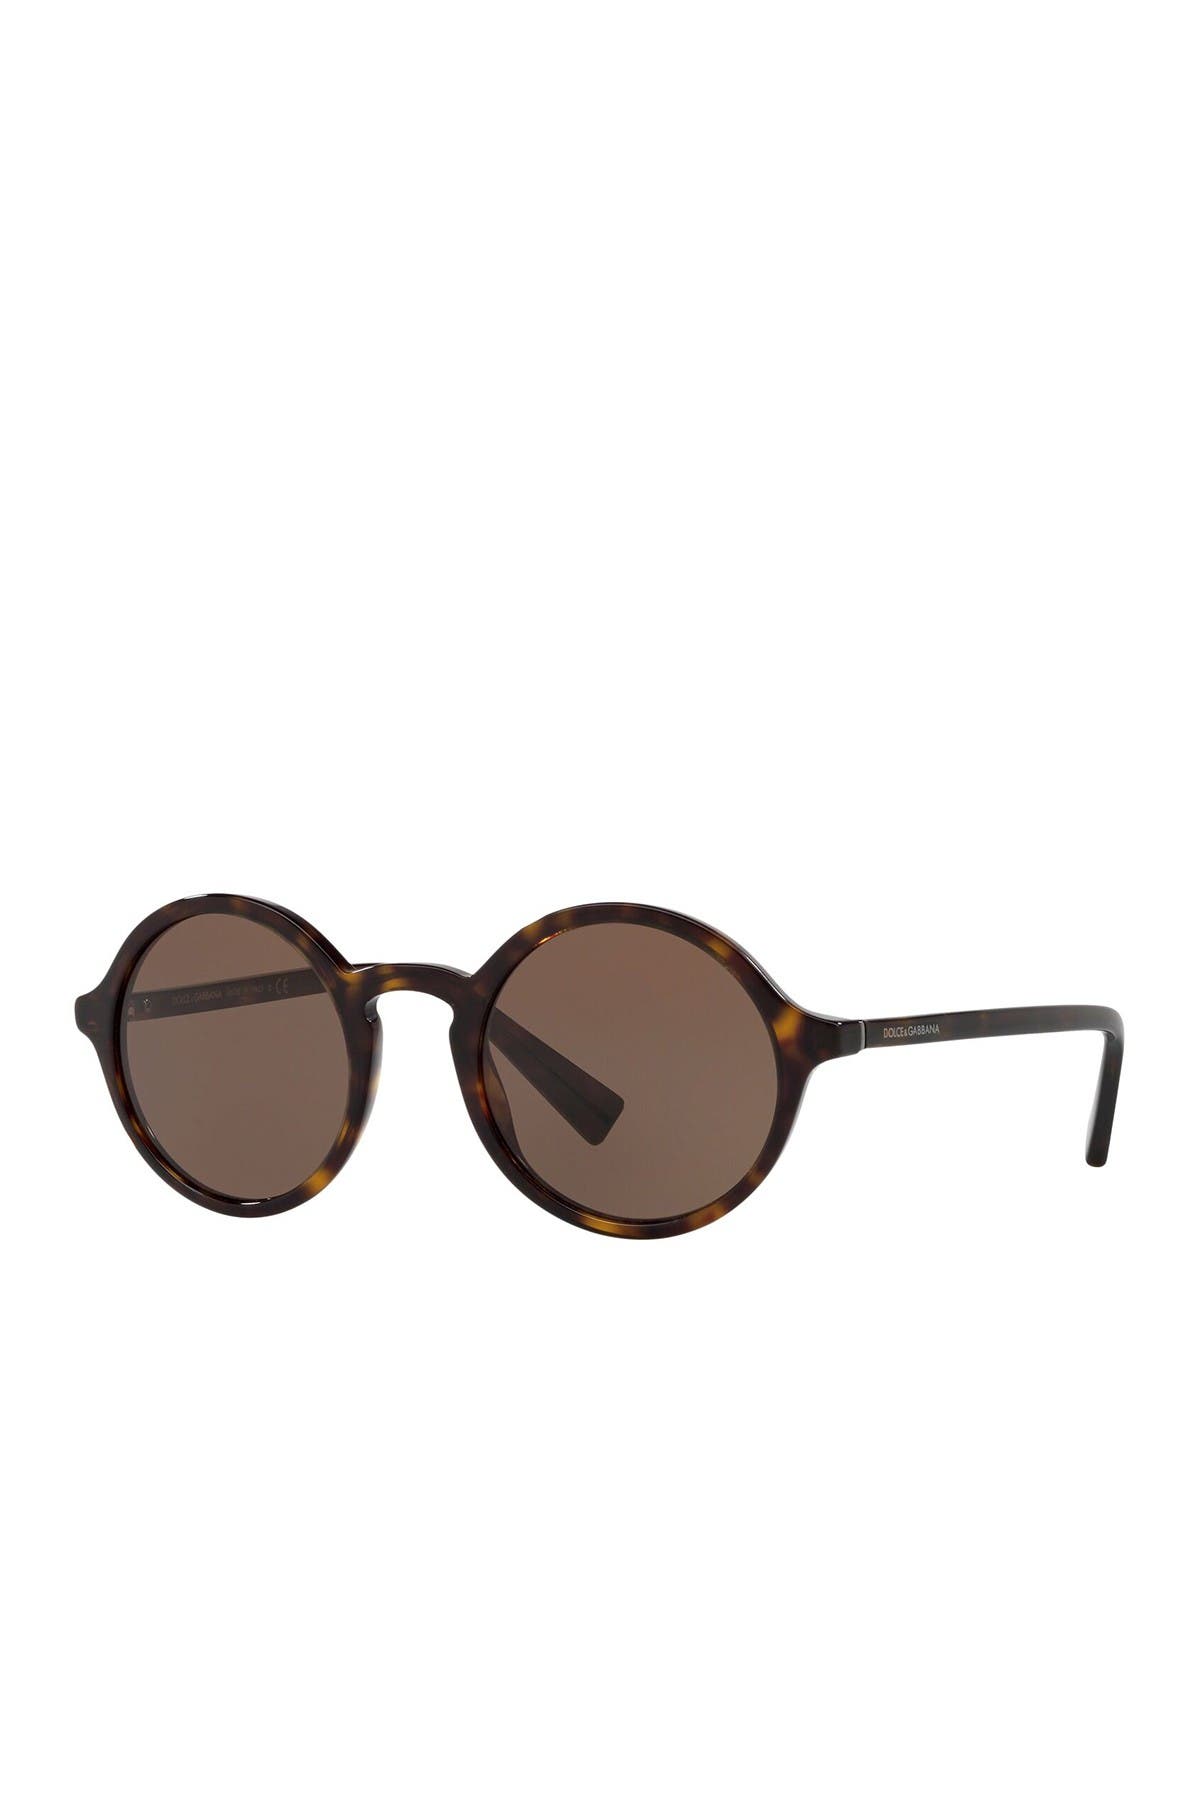 dolce & gabbana 49mm round sunglasses